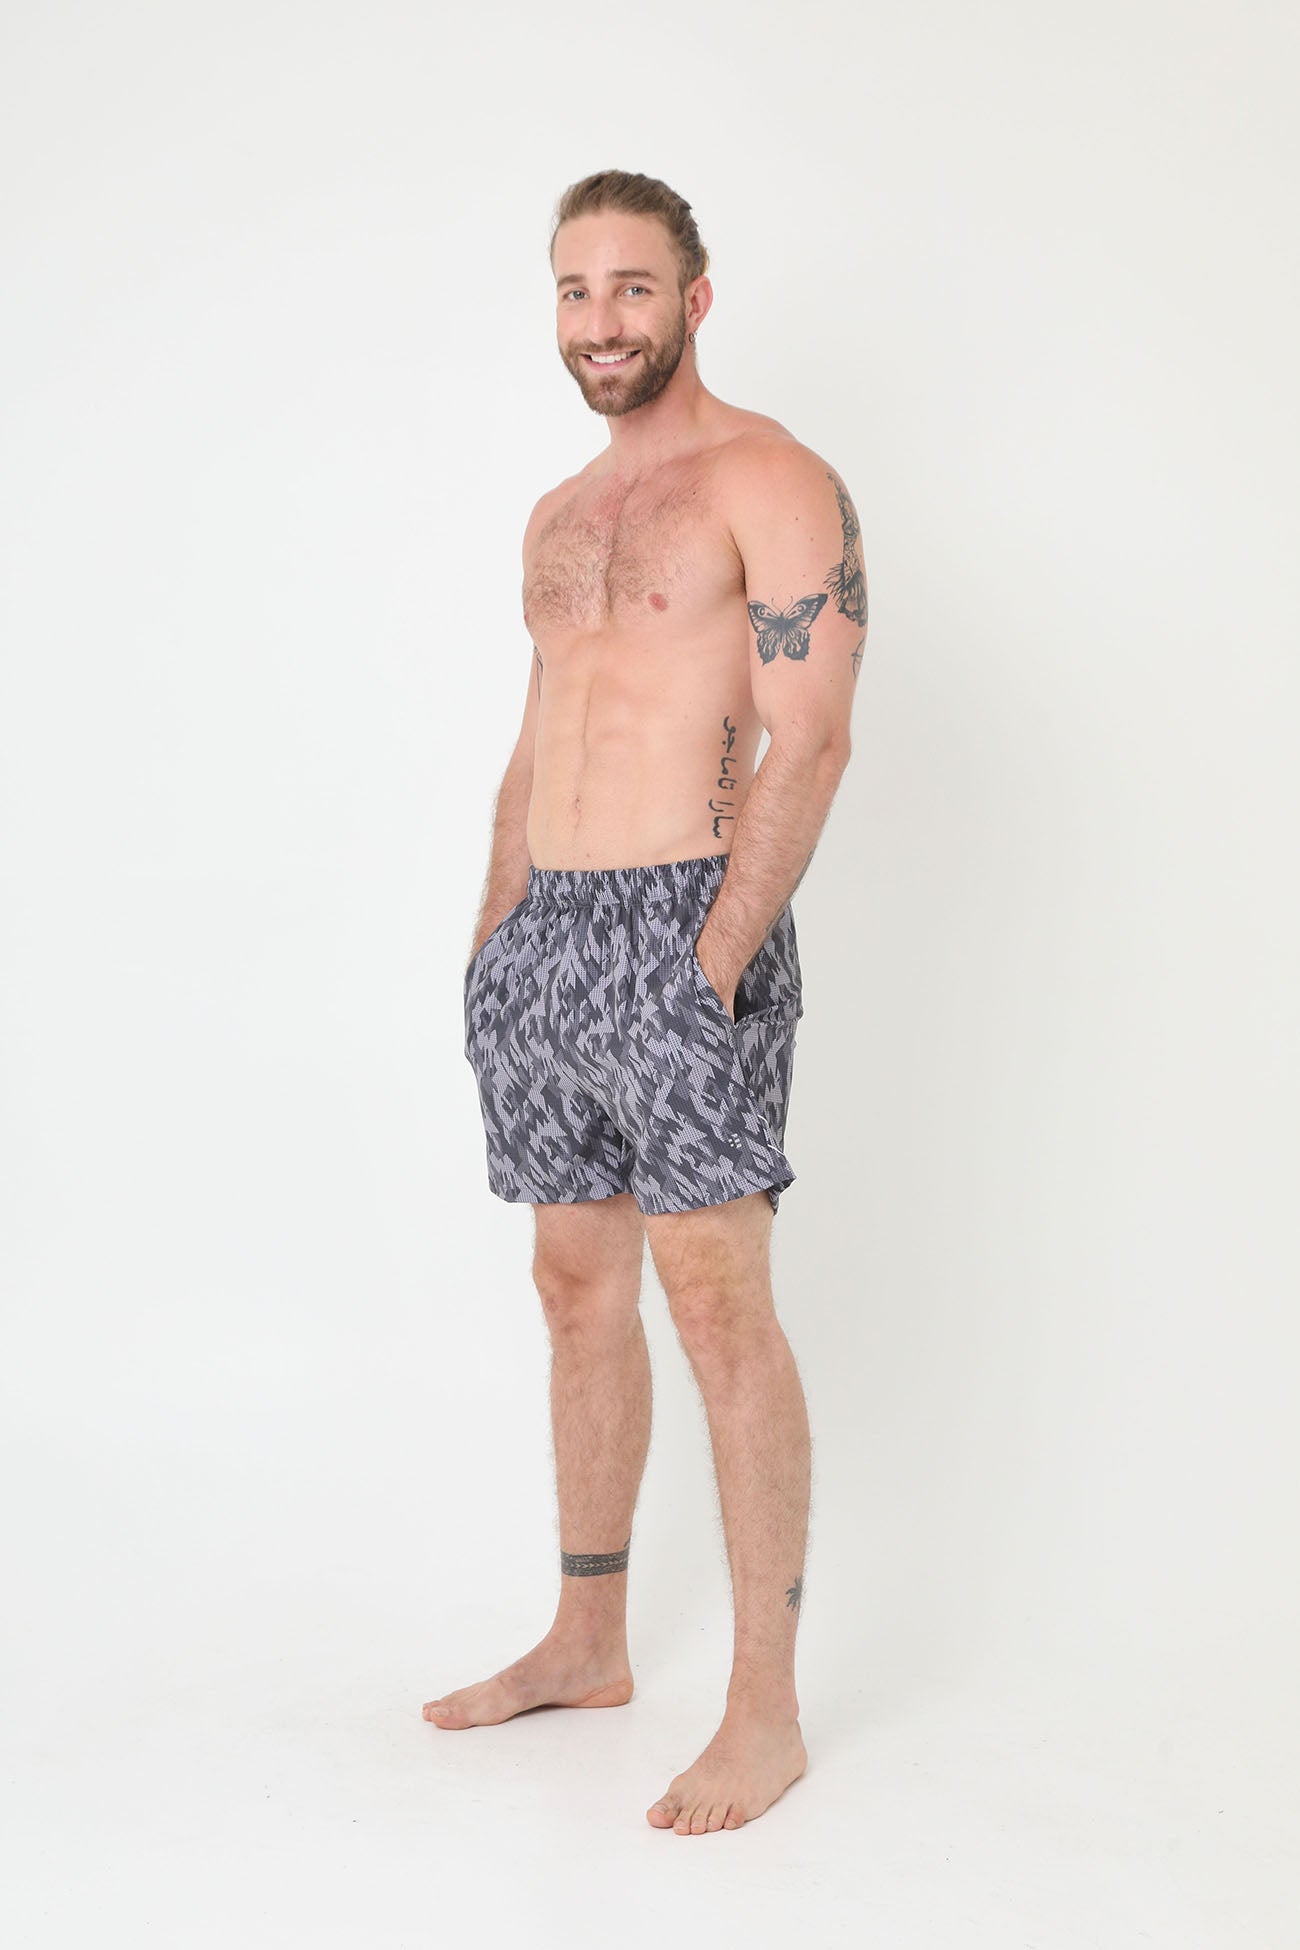 Pantaloneta de playa gris sublimada, bolsillos laterales y pretina ajustada para hombre